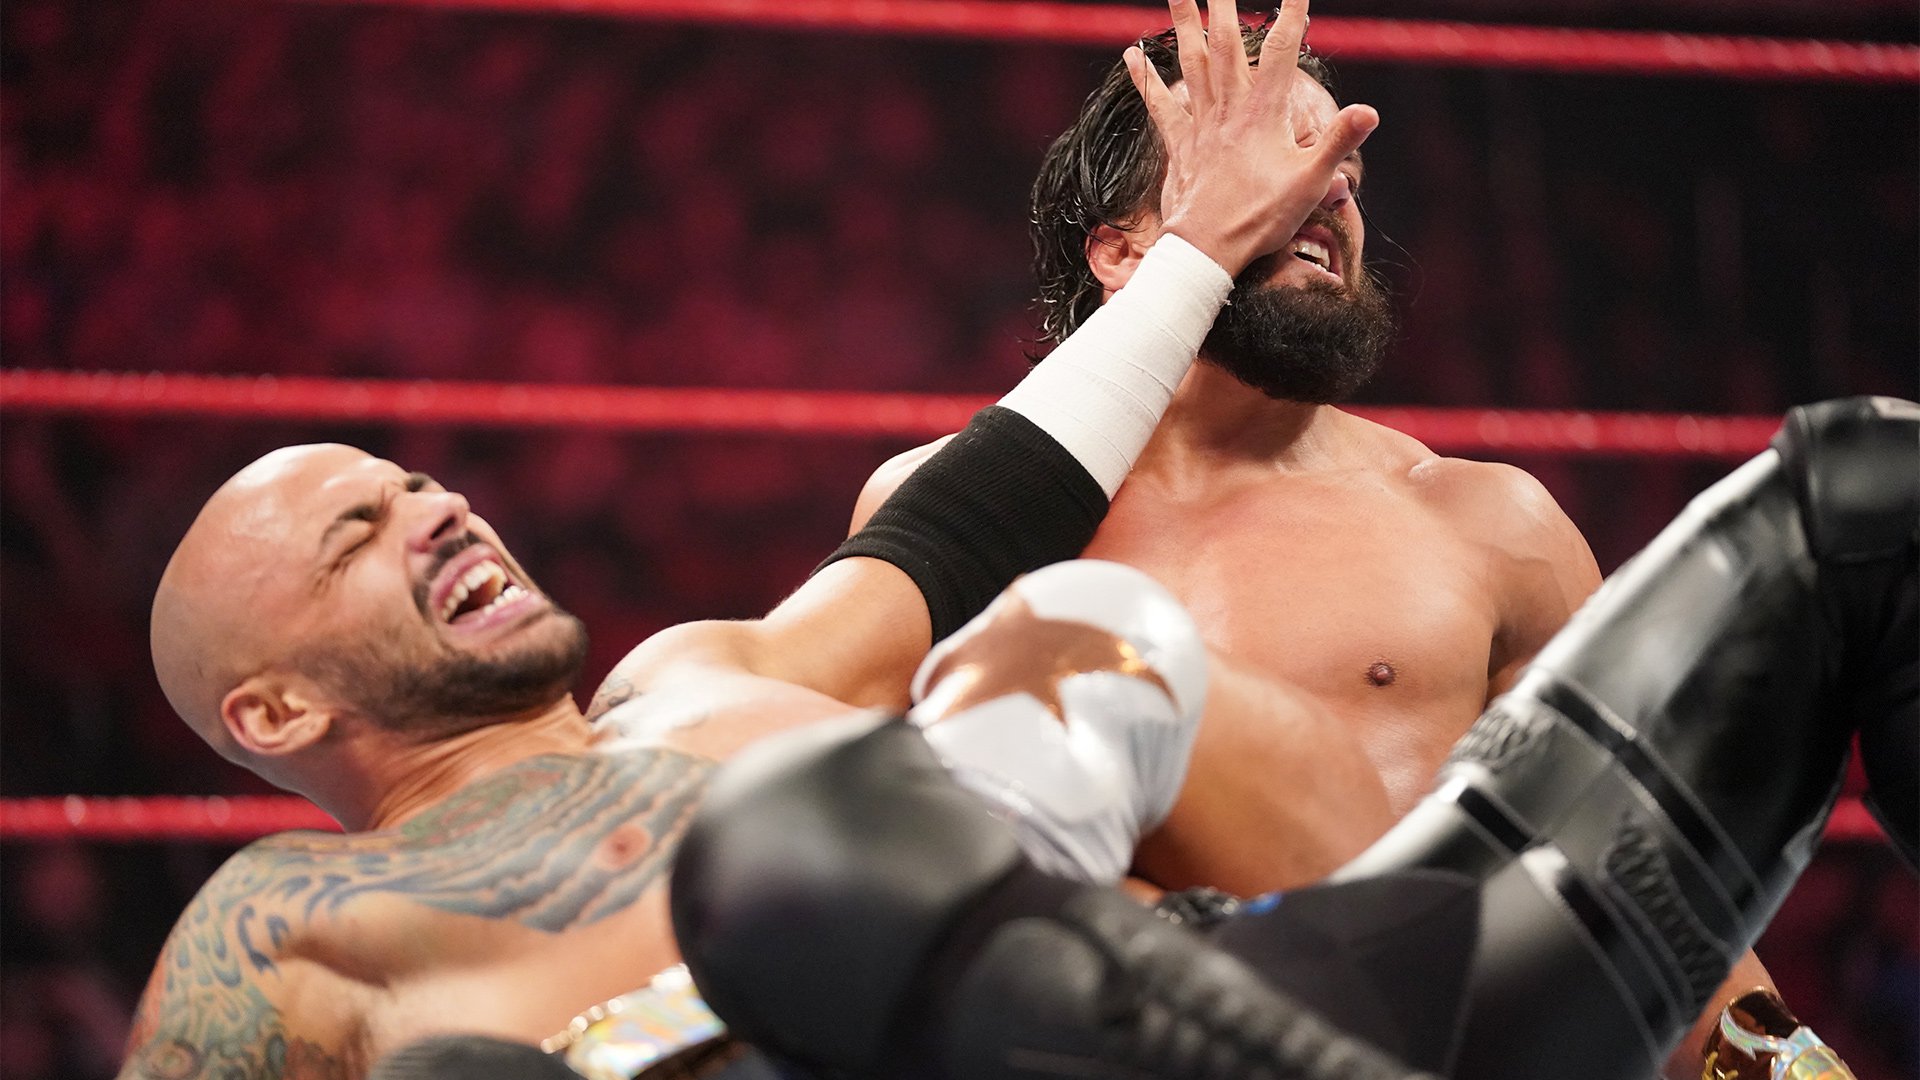 WWE WRESTLING NEWS UPDATES 2019: Ricochet def. Tony Nese